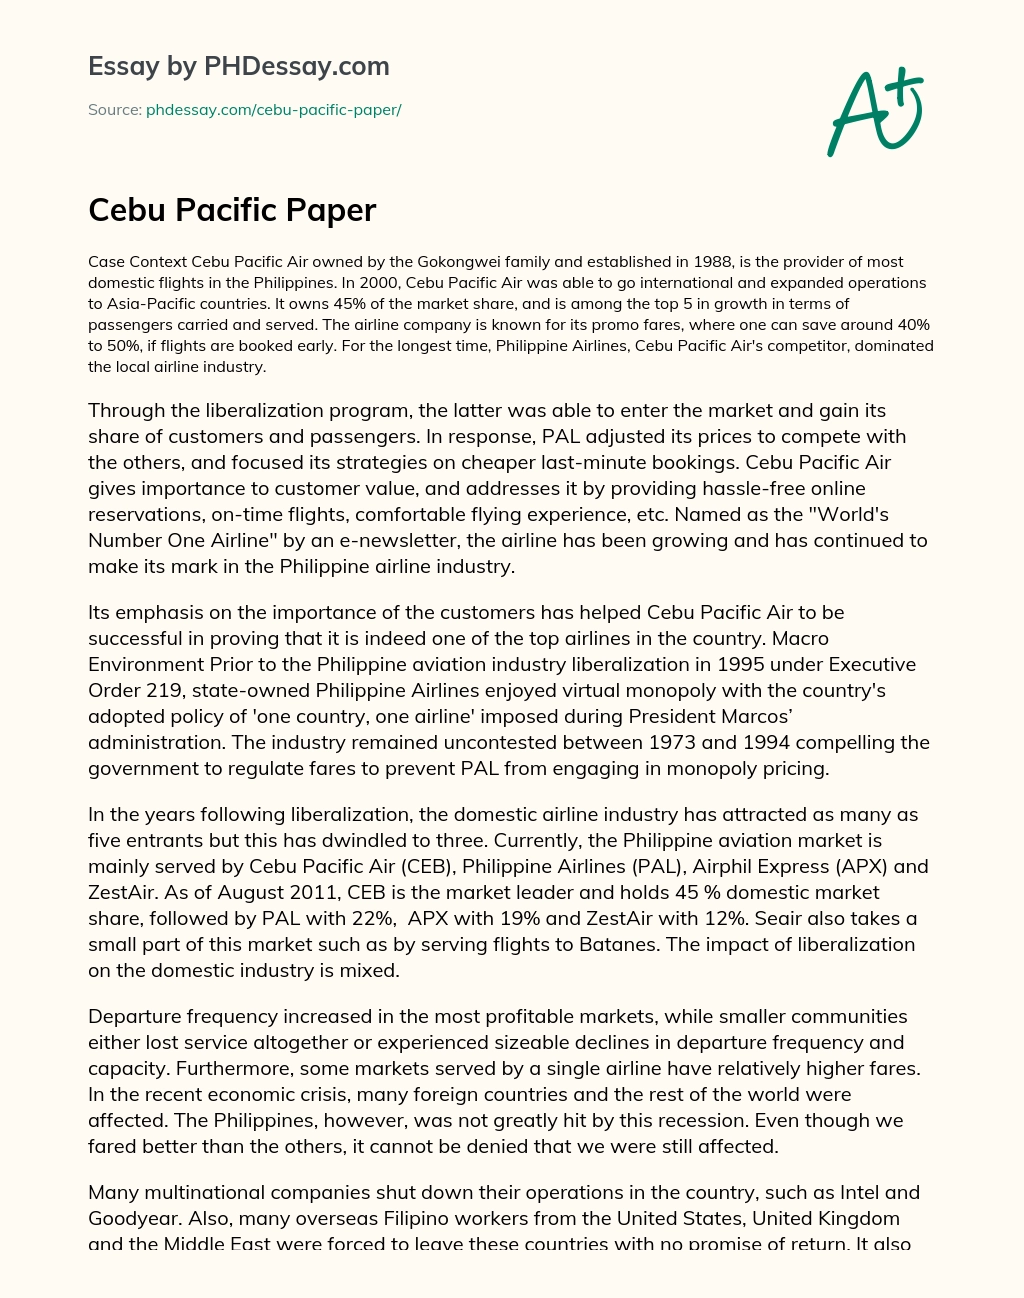 Cebu Pacific Paper essay